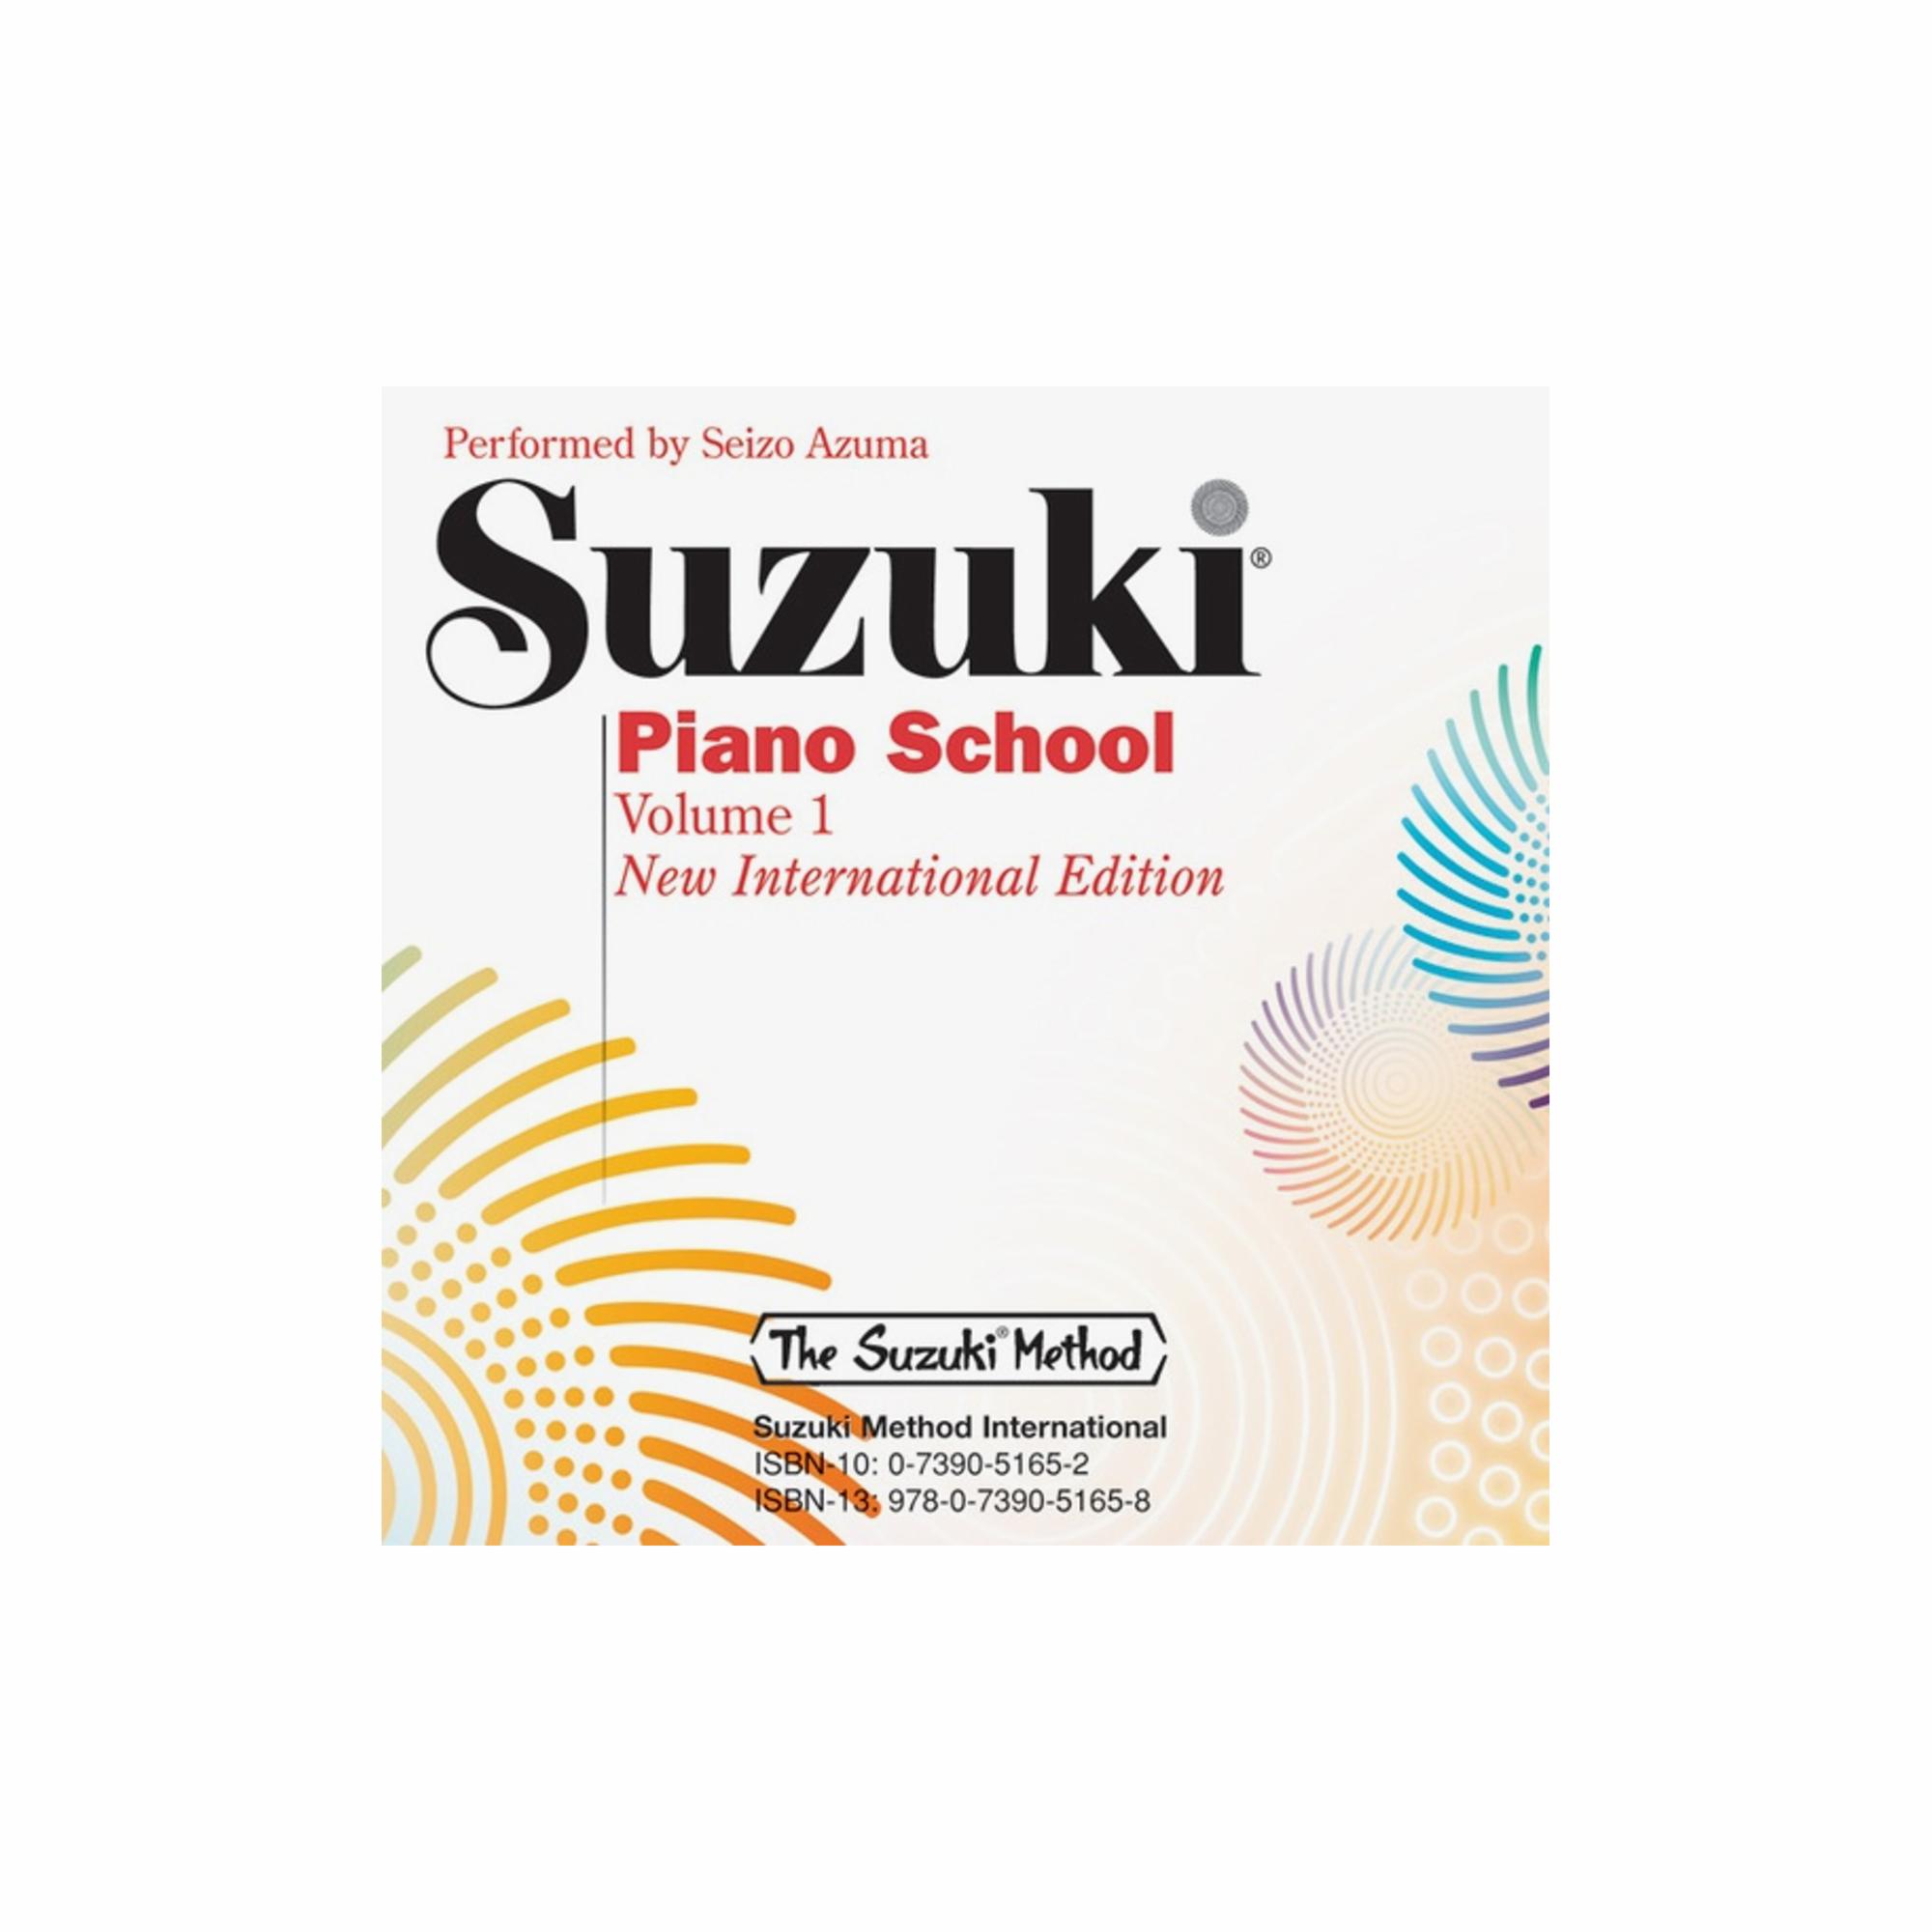 Suzuki Piano School: CD's